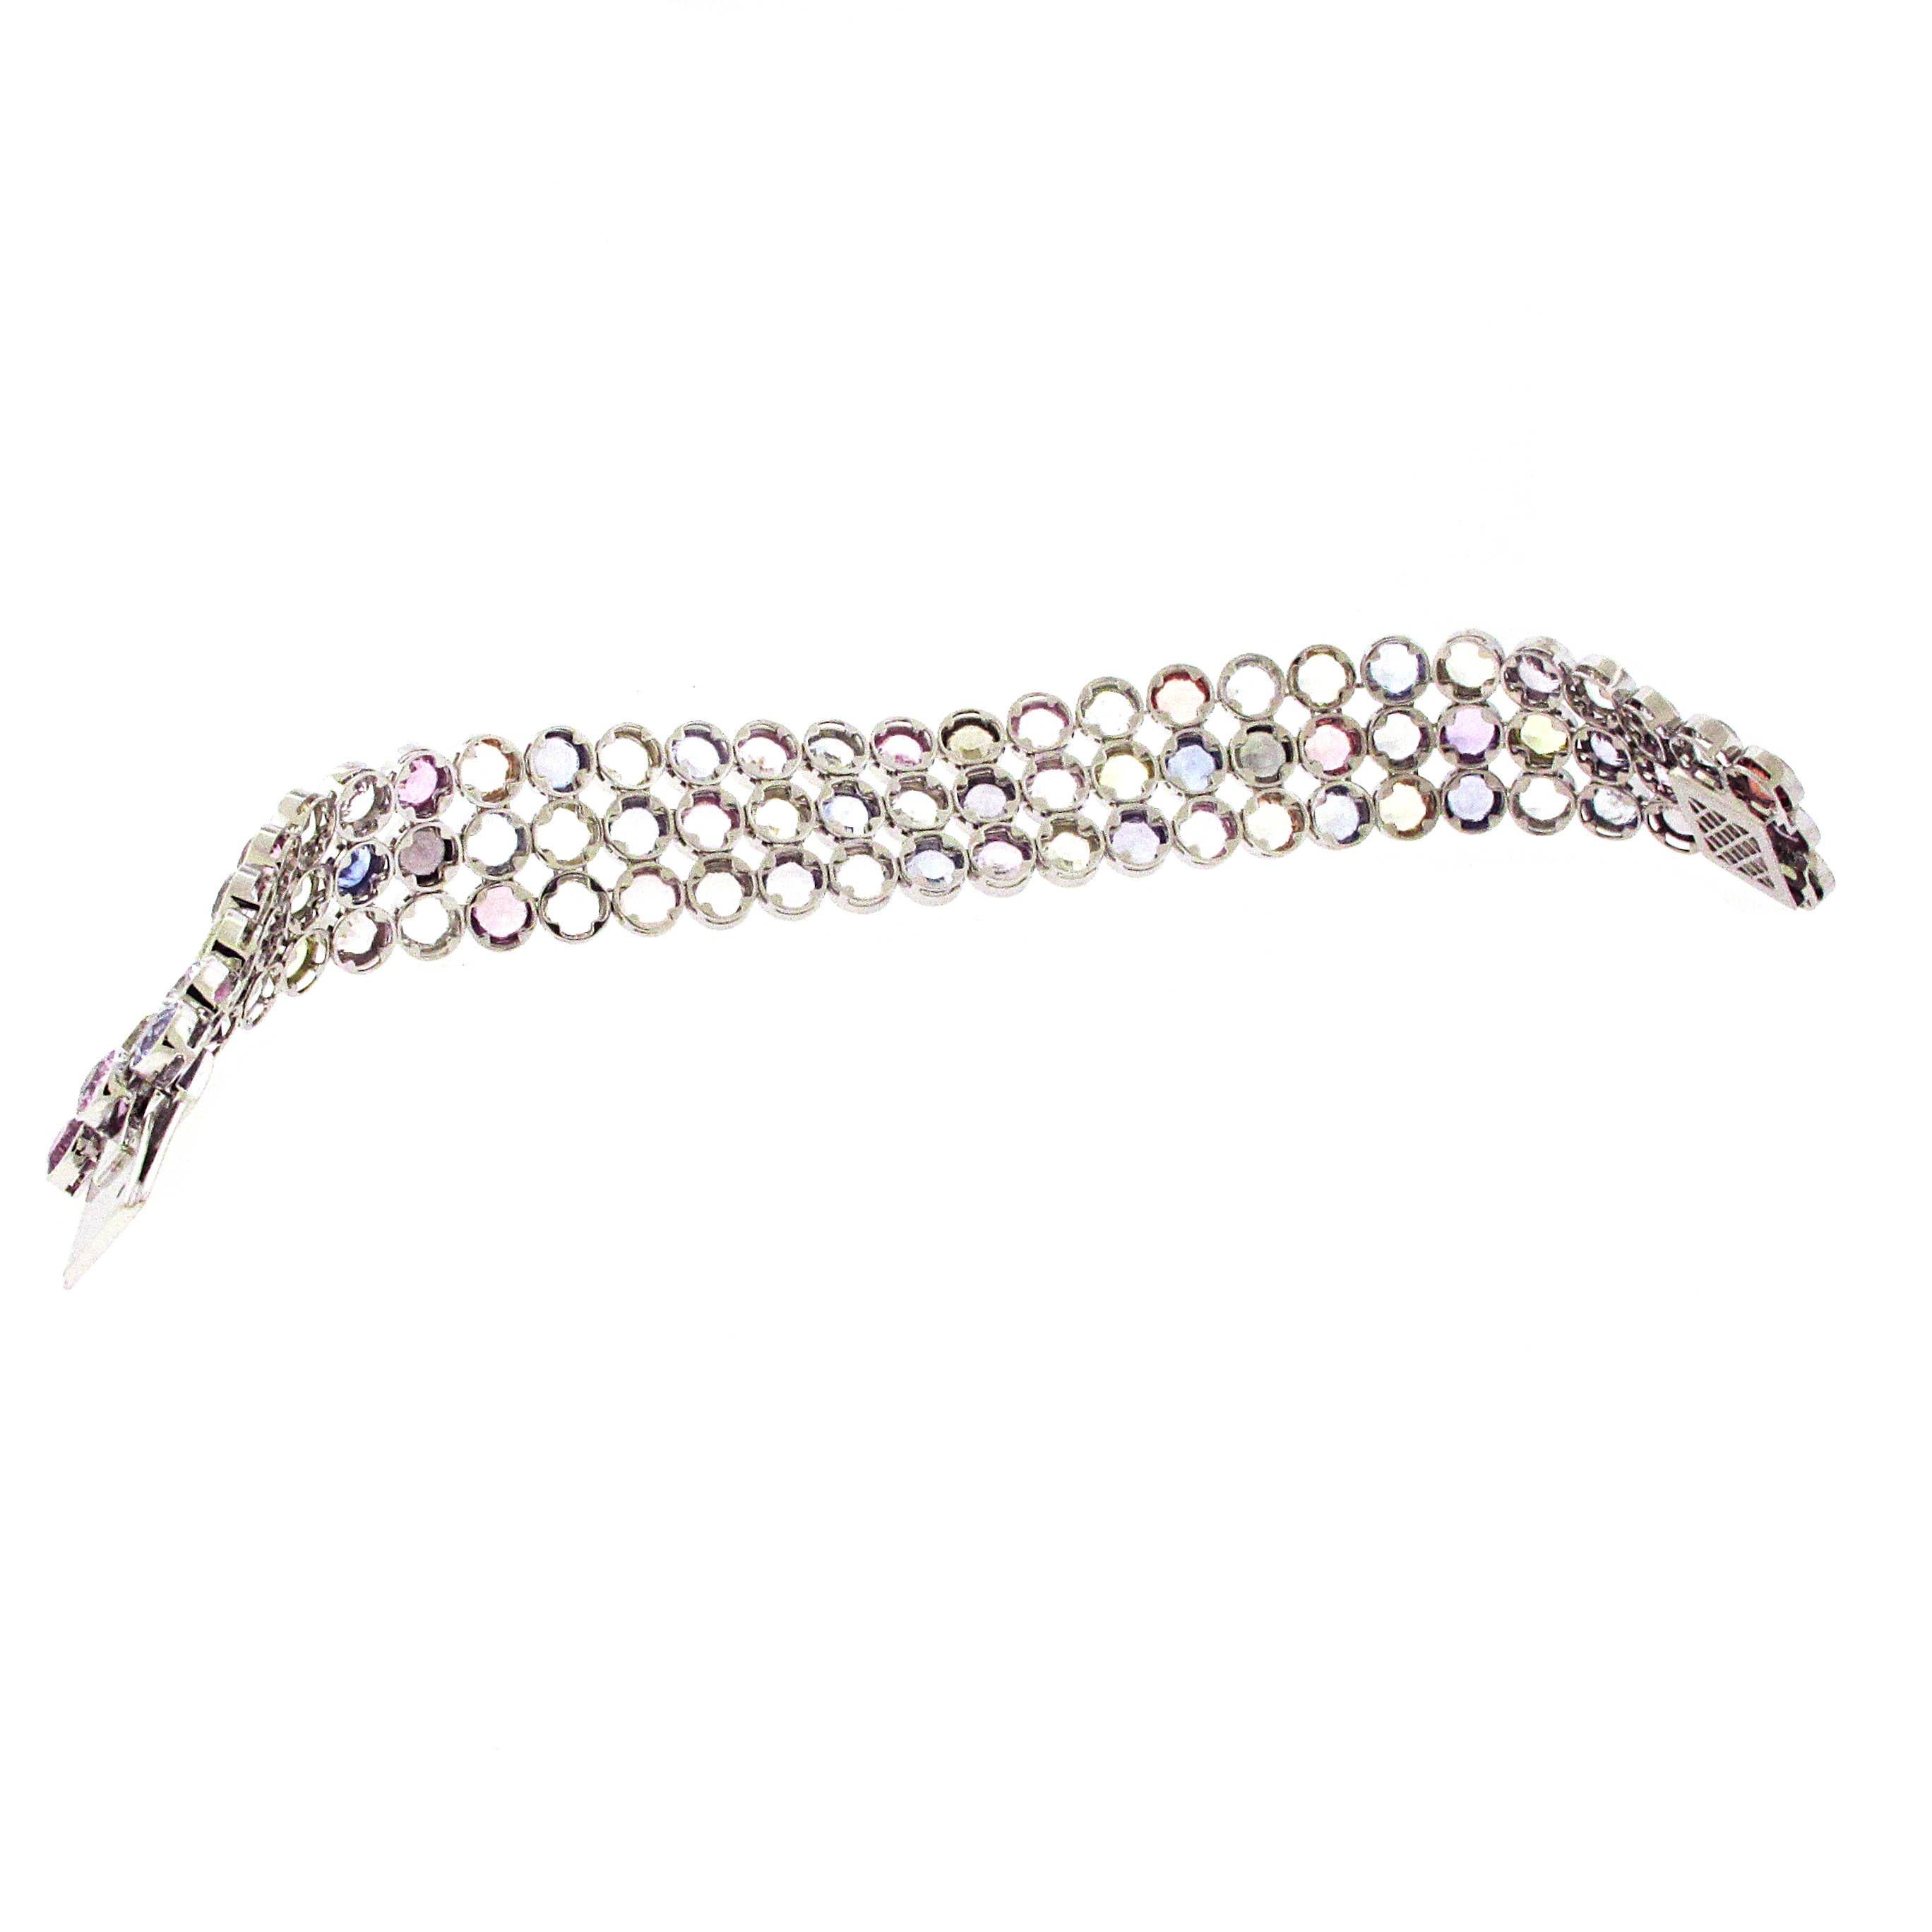 Round Cut Multi-Colored Sapphire Bracelet, Approx 58 Carat, 18 Karat White Gold